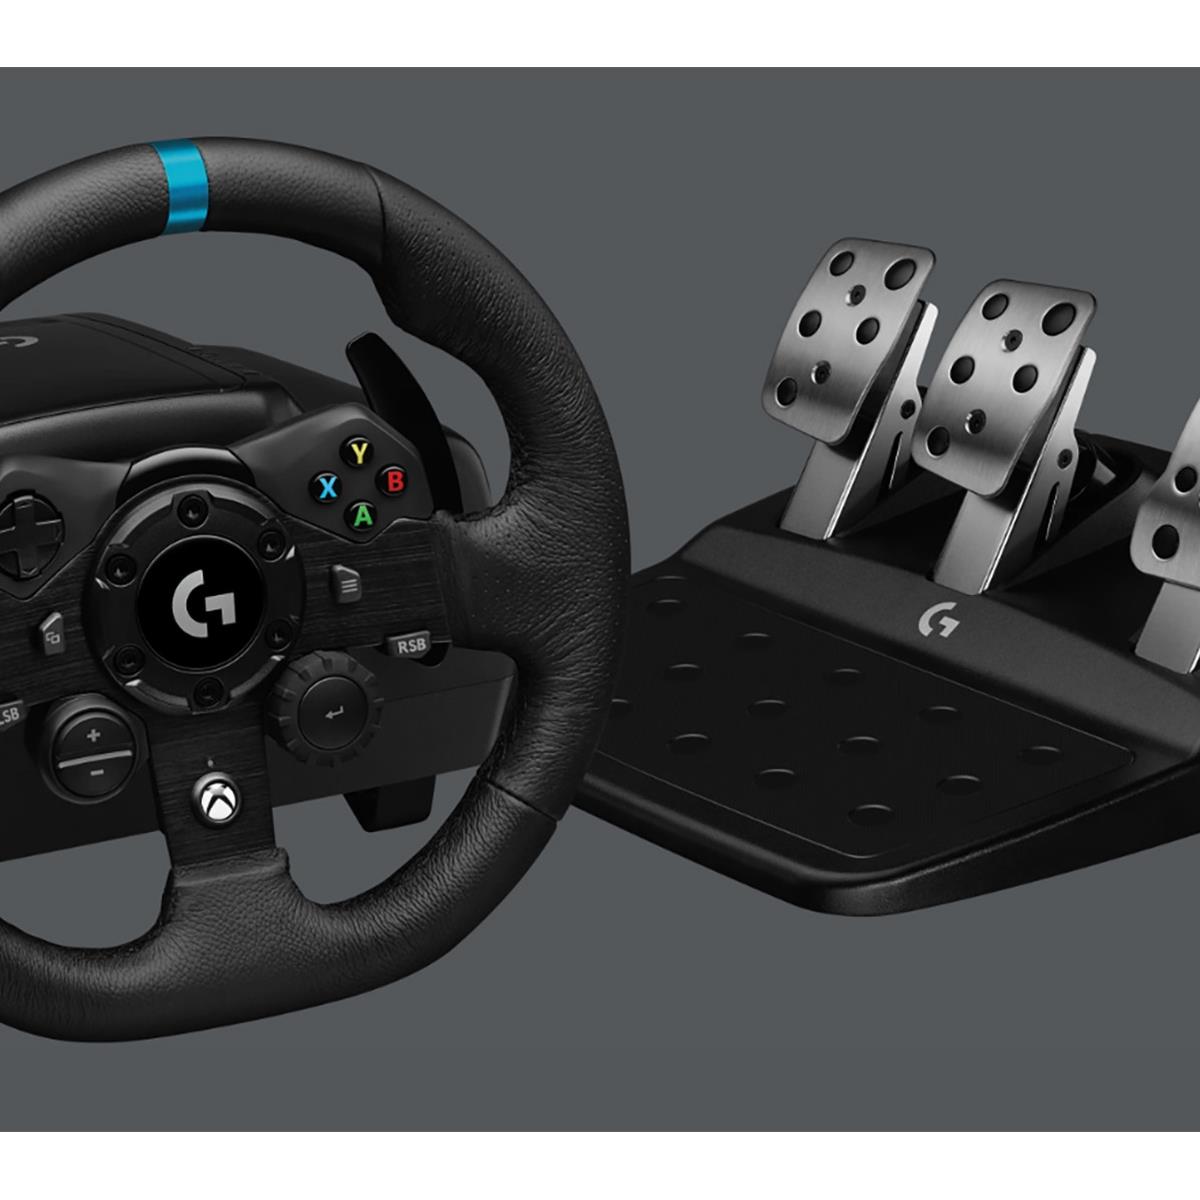 Stat glans gradvist Logitech Launches G923 Racing Wheel With Advanced TrueForce Feedback System  For Sim Fans | HotHardware